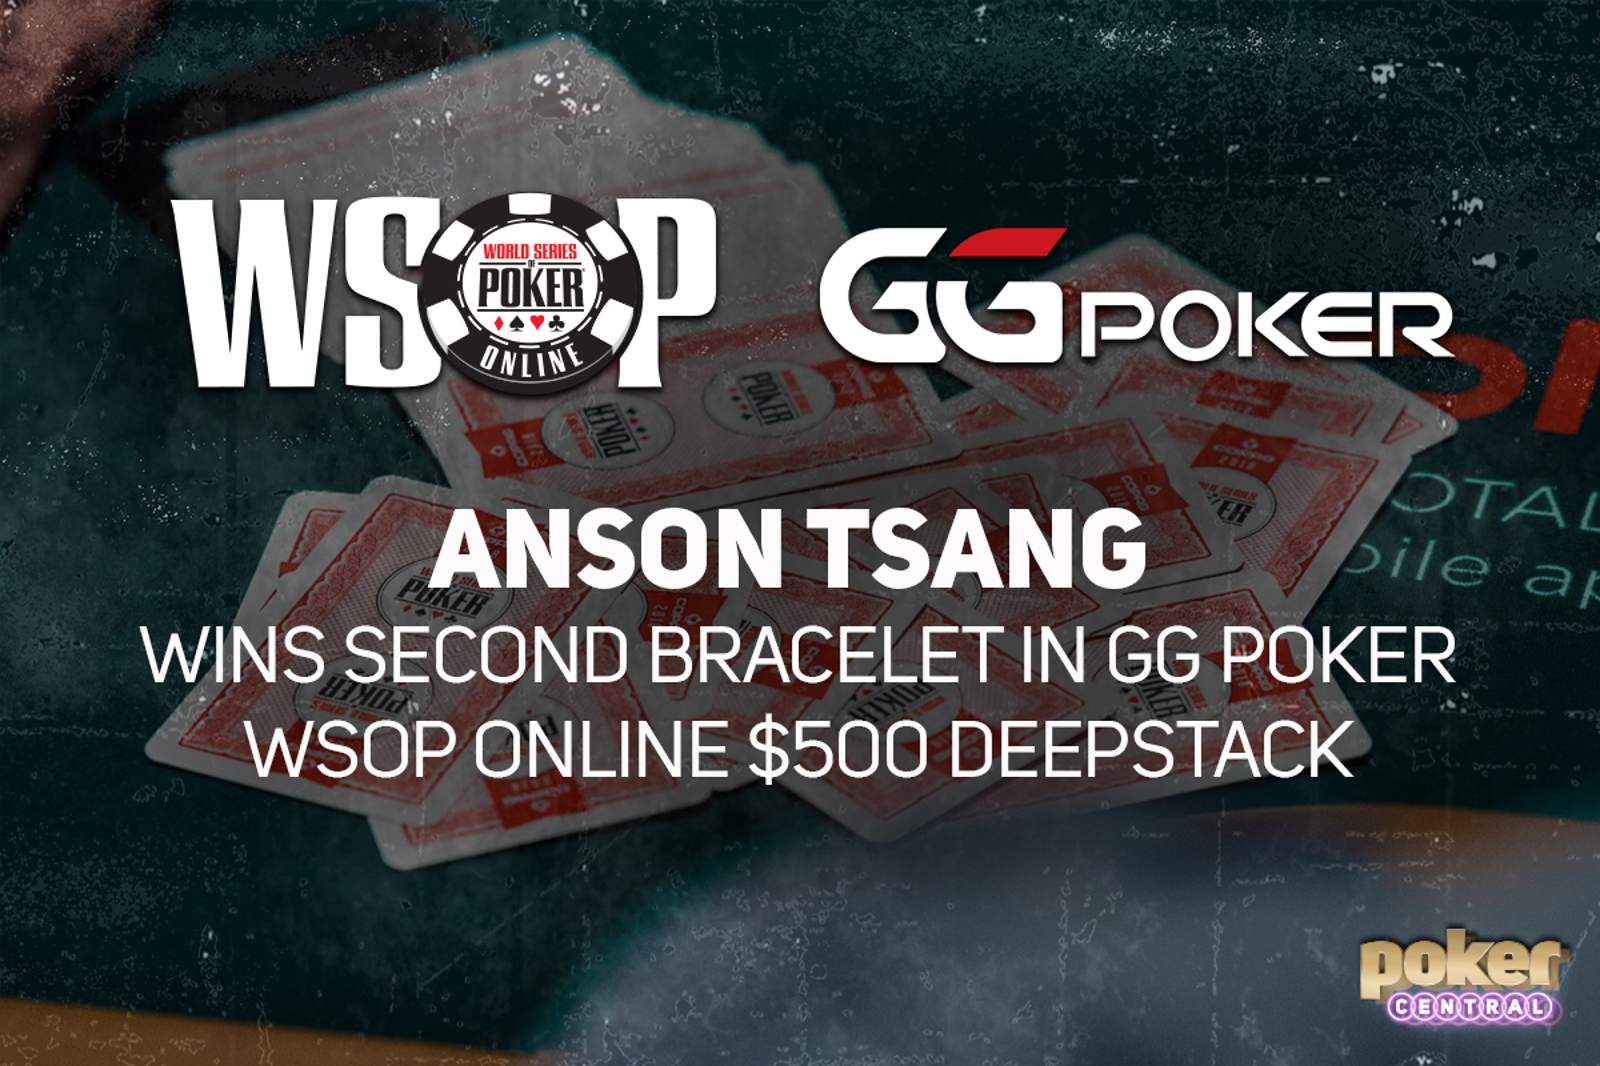 Three More Bracelets Awarded on GGPoker WSOP Online - Anson Tsang Wins $500 Deepstack for $150,460